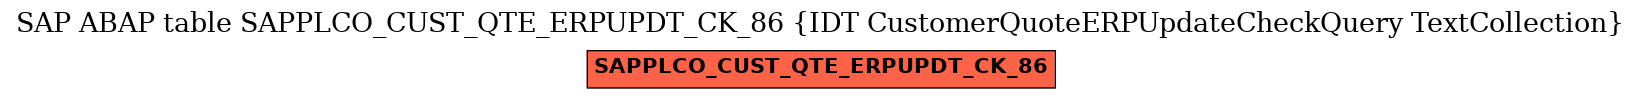 E-R Diagram for table SAPPLCO_CUST_QTE_ERPUPDT_CK_86 (IDT CustomerQuoteERPUpdateCheckQuery TextCollection)